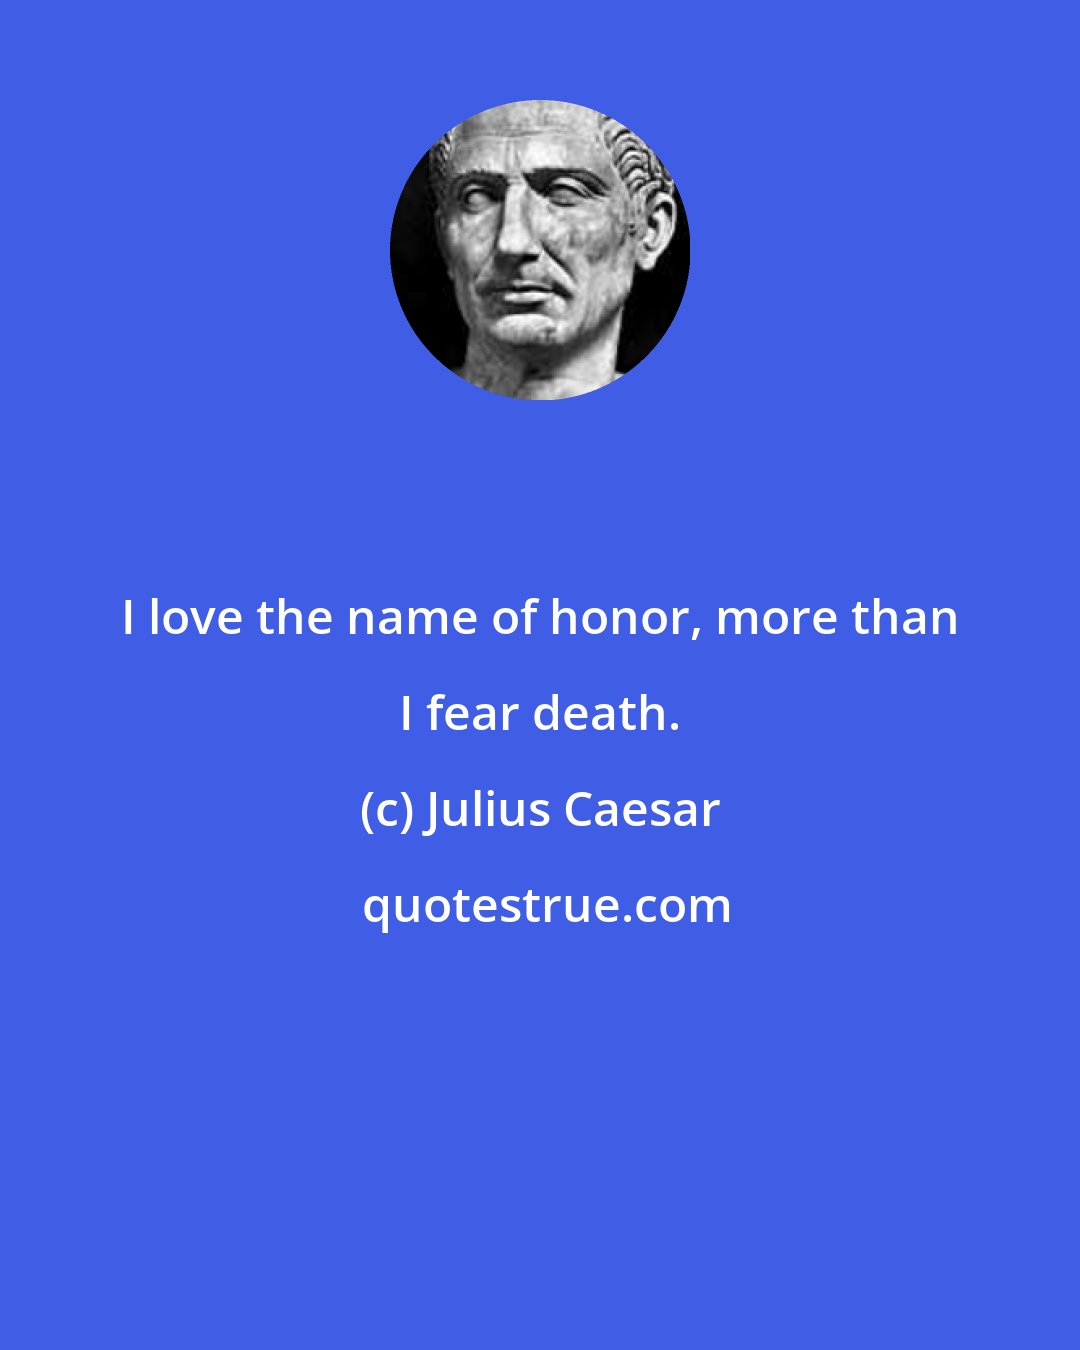 Julius Caesar: I love the name of honor, more than I fear death.